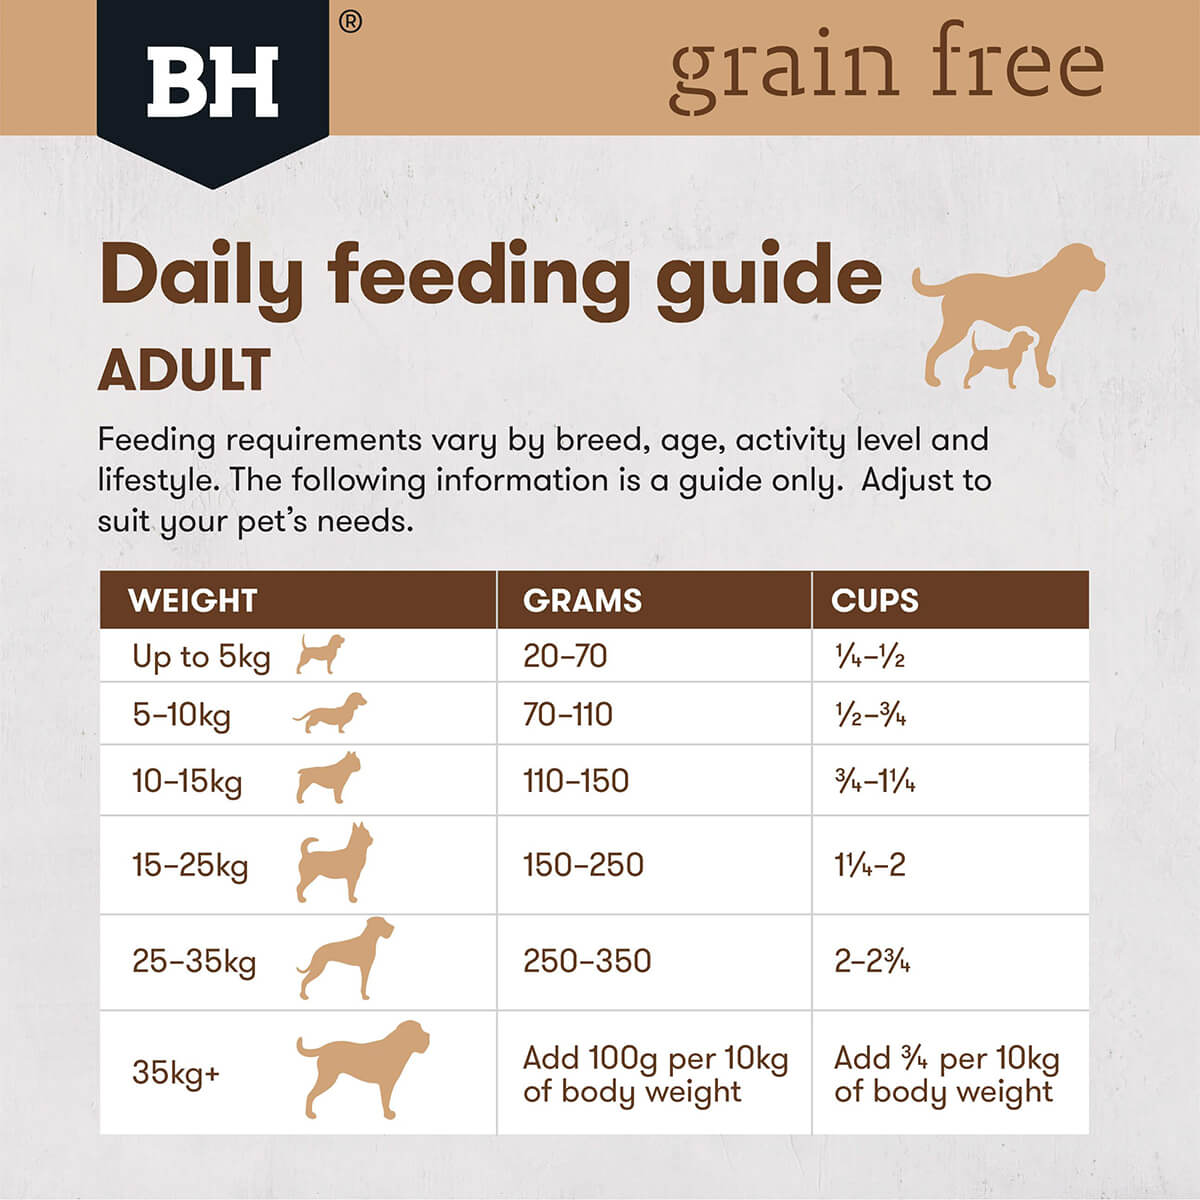 Black Hawk Grain Free Adult Lamb Dry Dog Food (122713000030) [default_color]